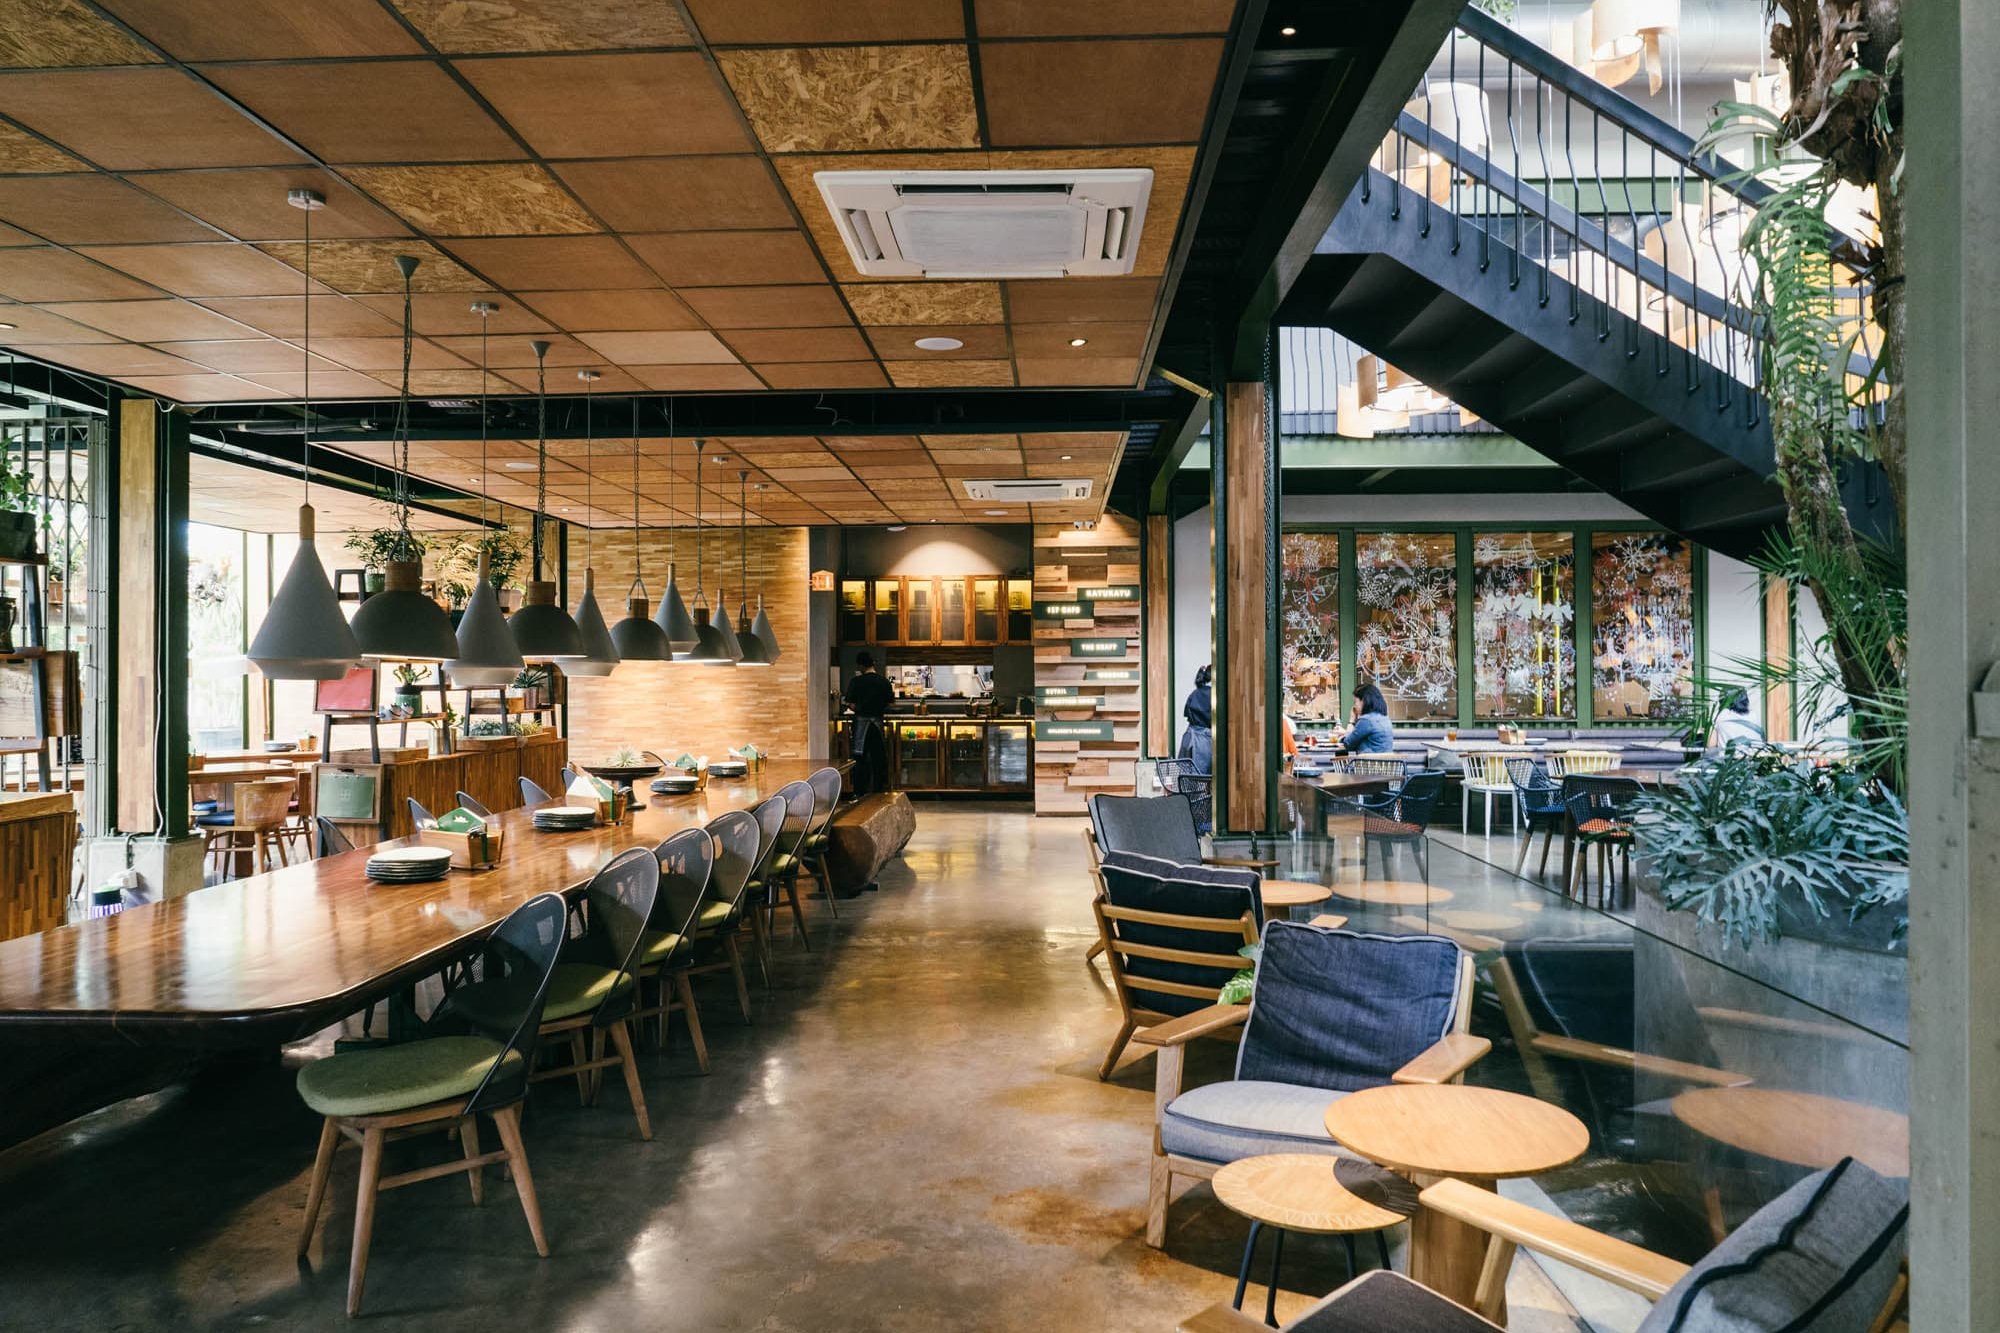 Kayu-kayu Restaurant didominasi dengan interior kayu yang elegan